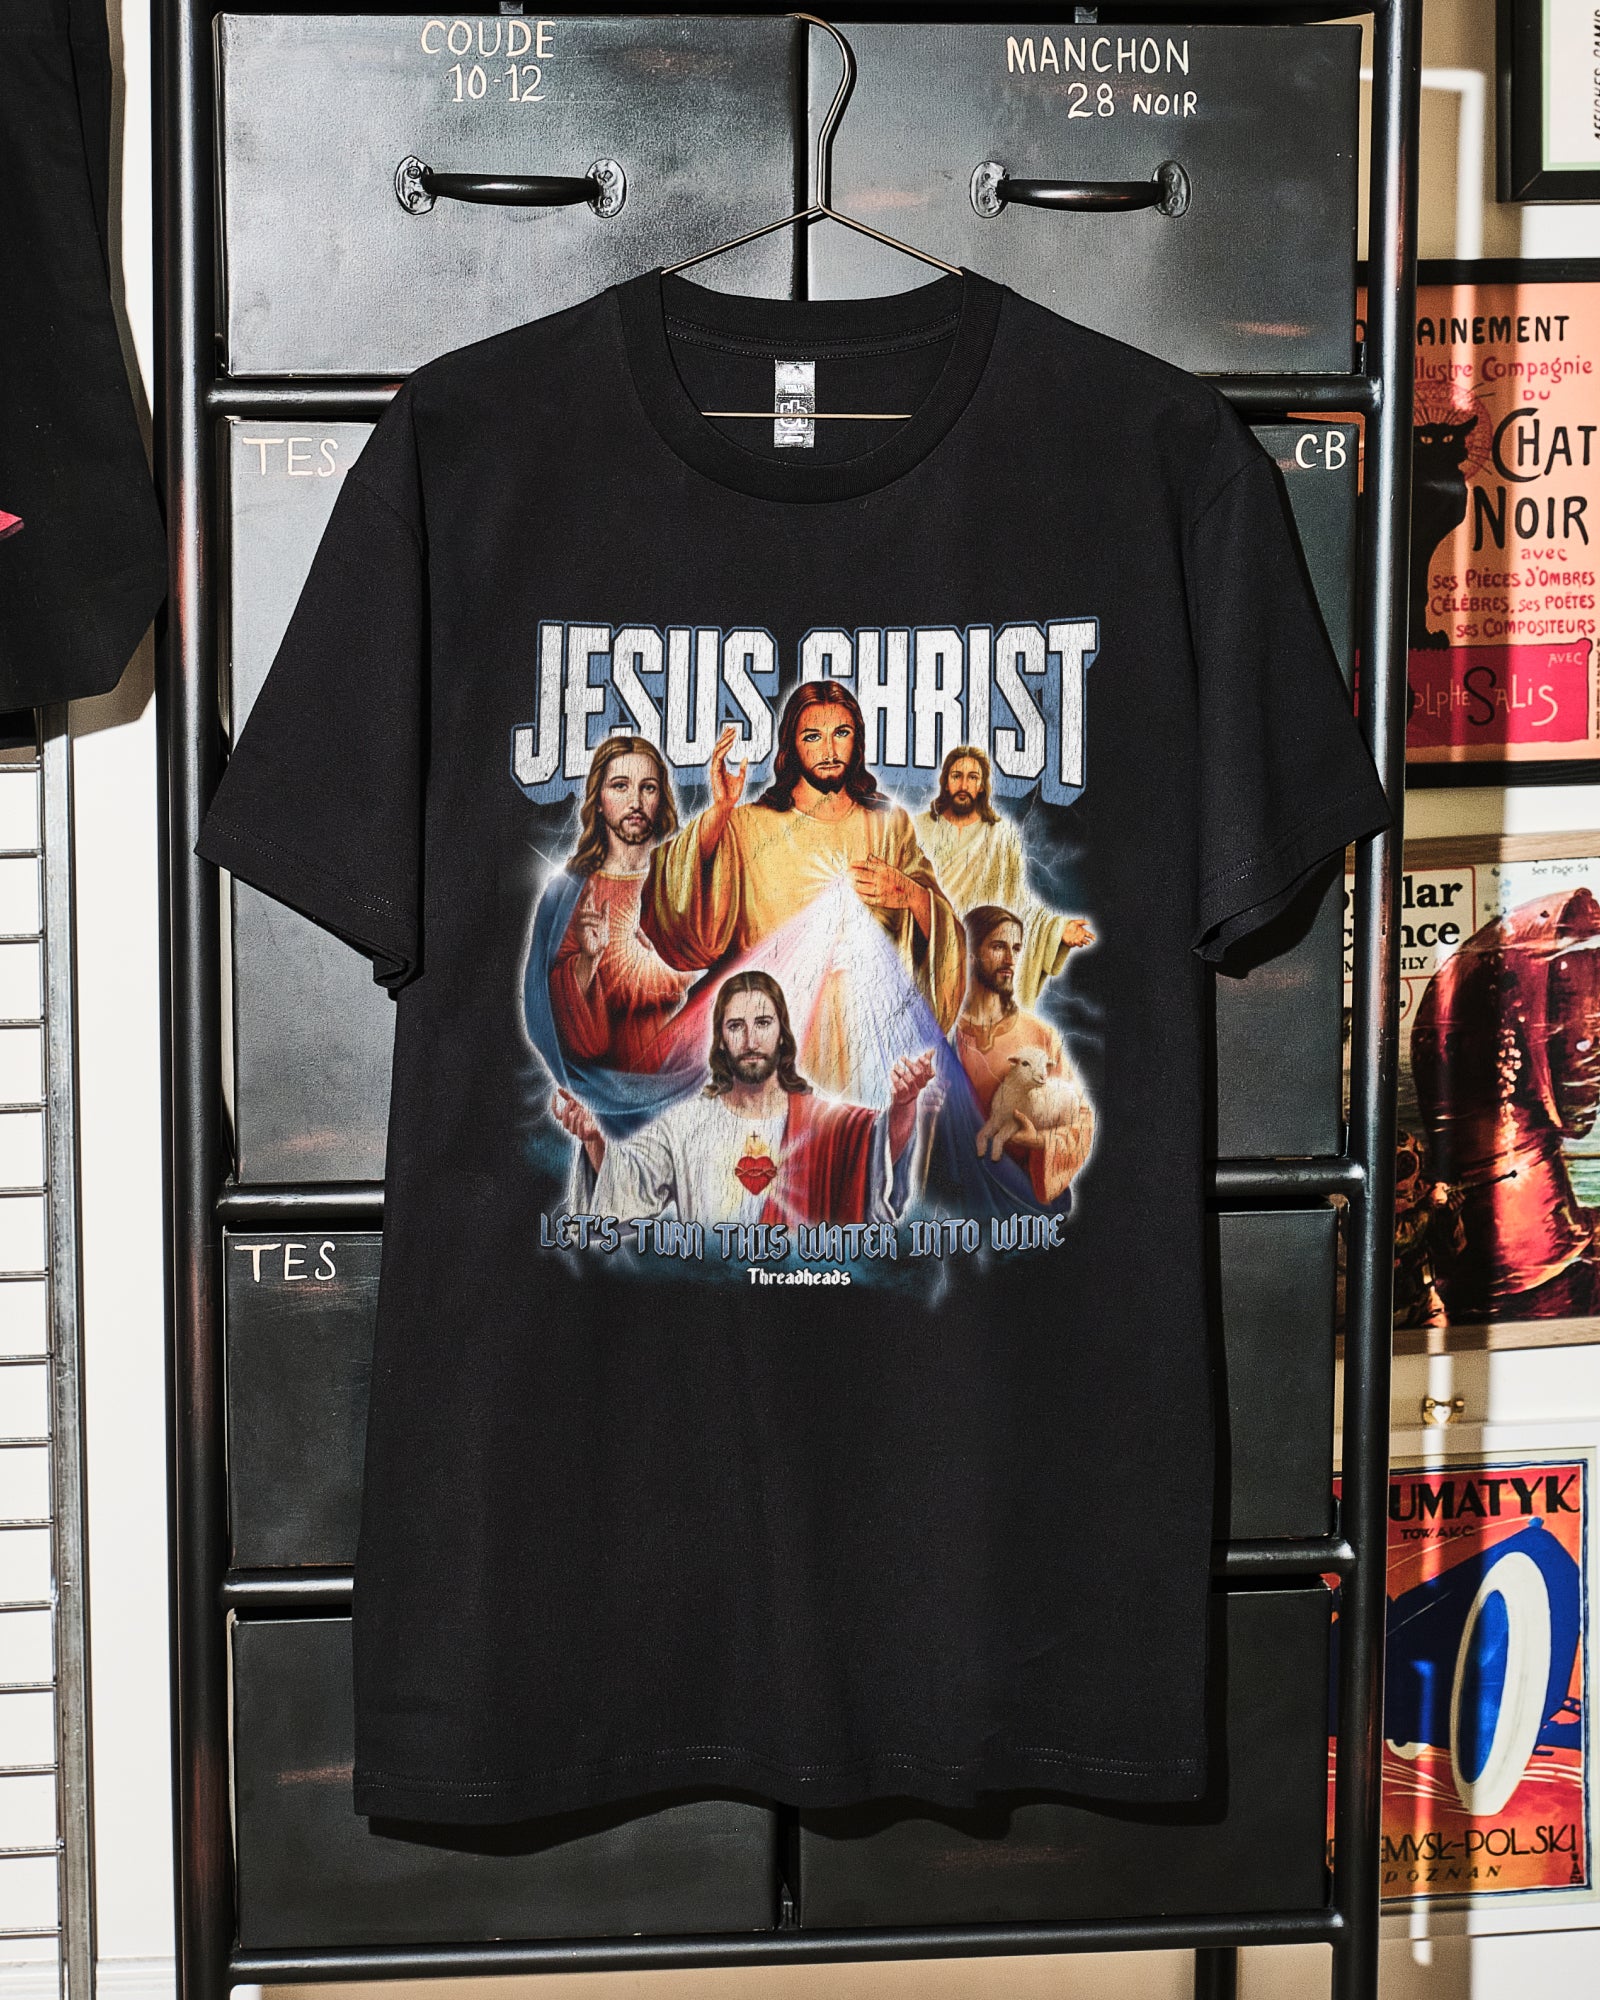 Jesus Christ T-Shirt Australia Online